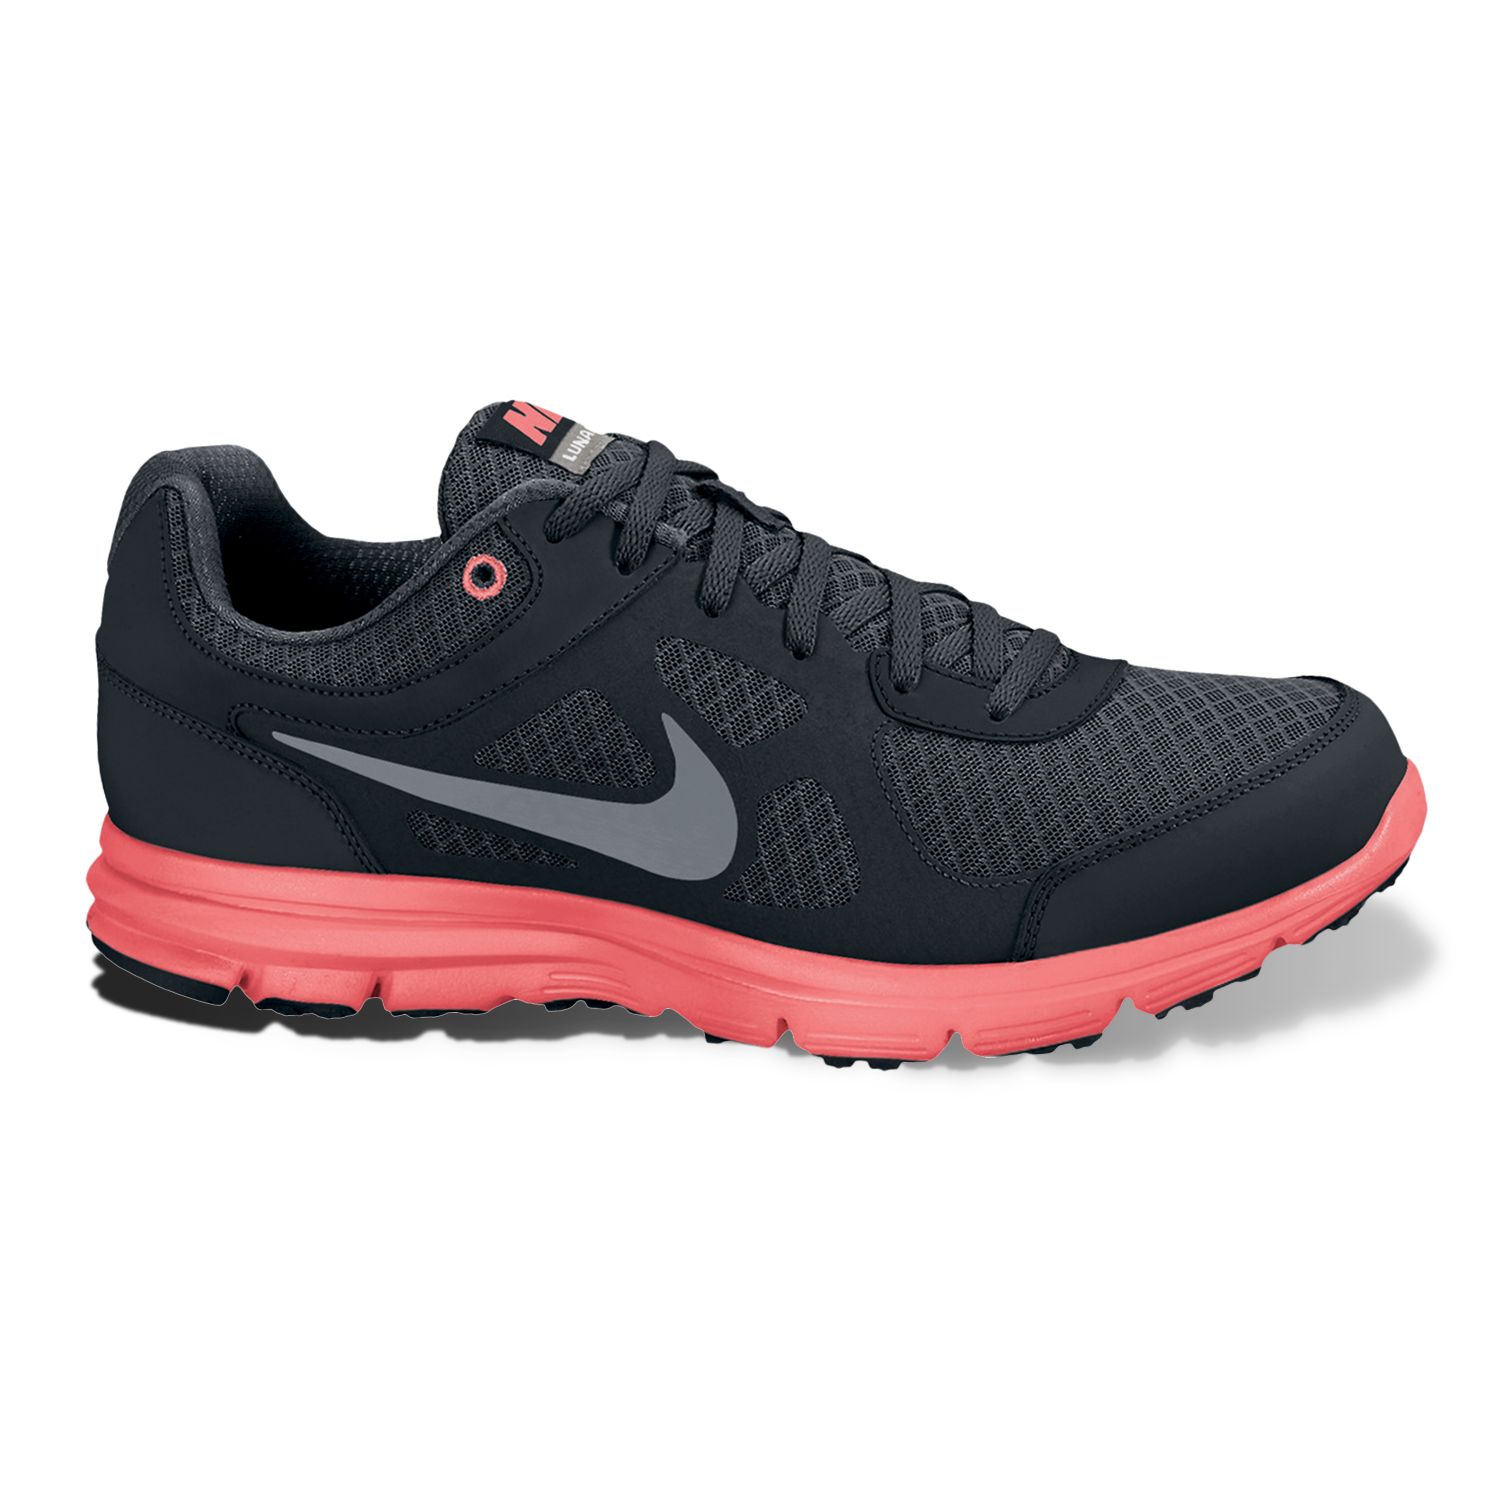 Nike Lunar Forever Running Shoes - Women